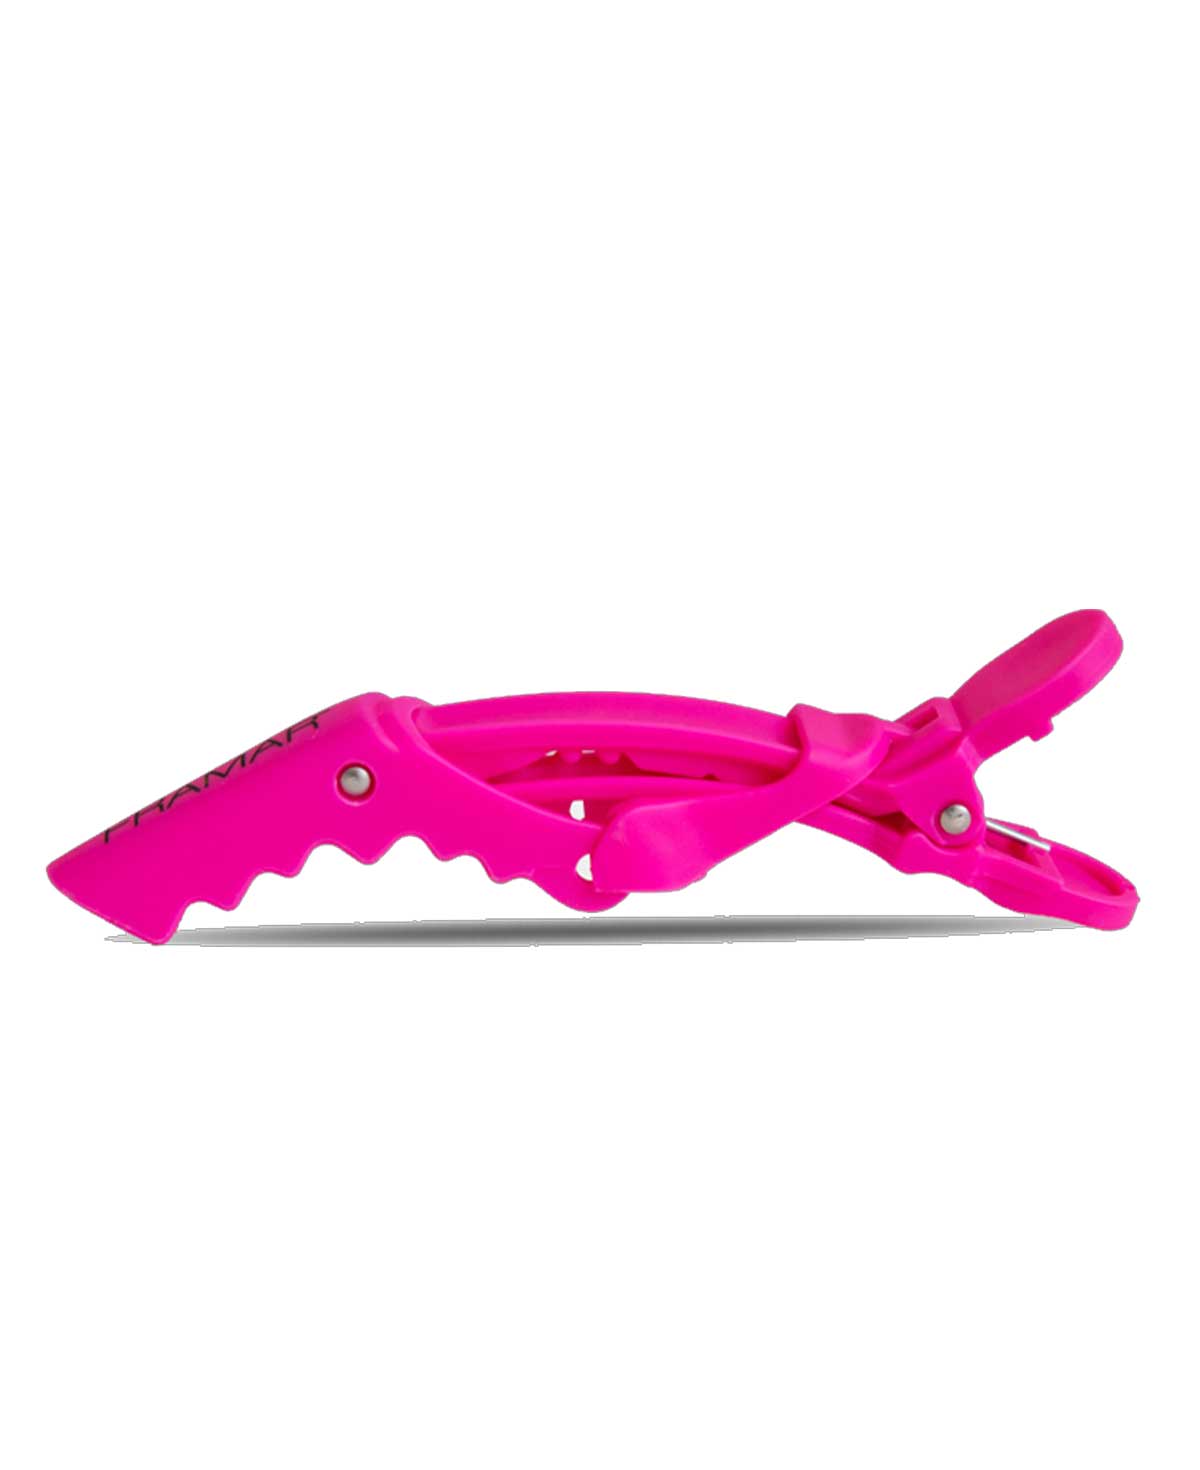 Framar Gator Grips Clips 4 pcs - Pink